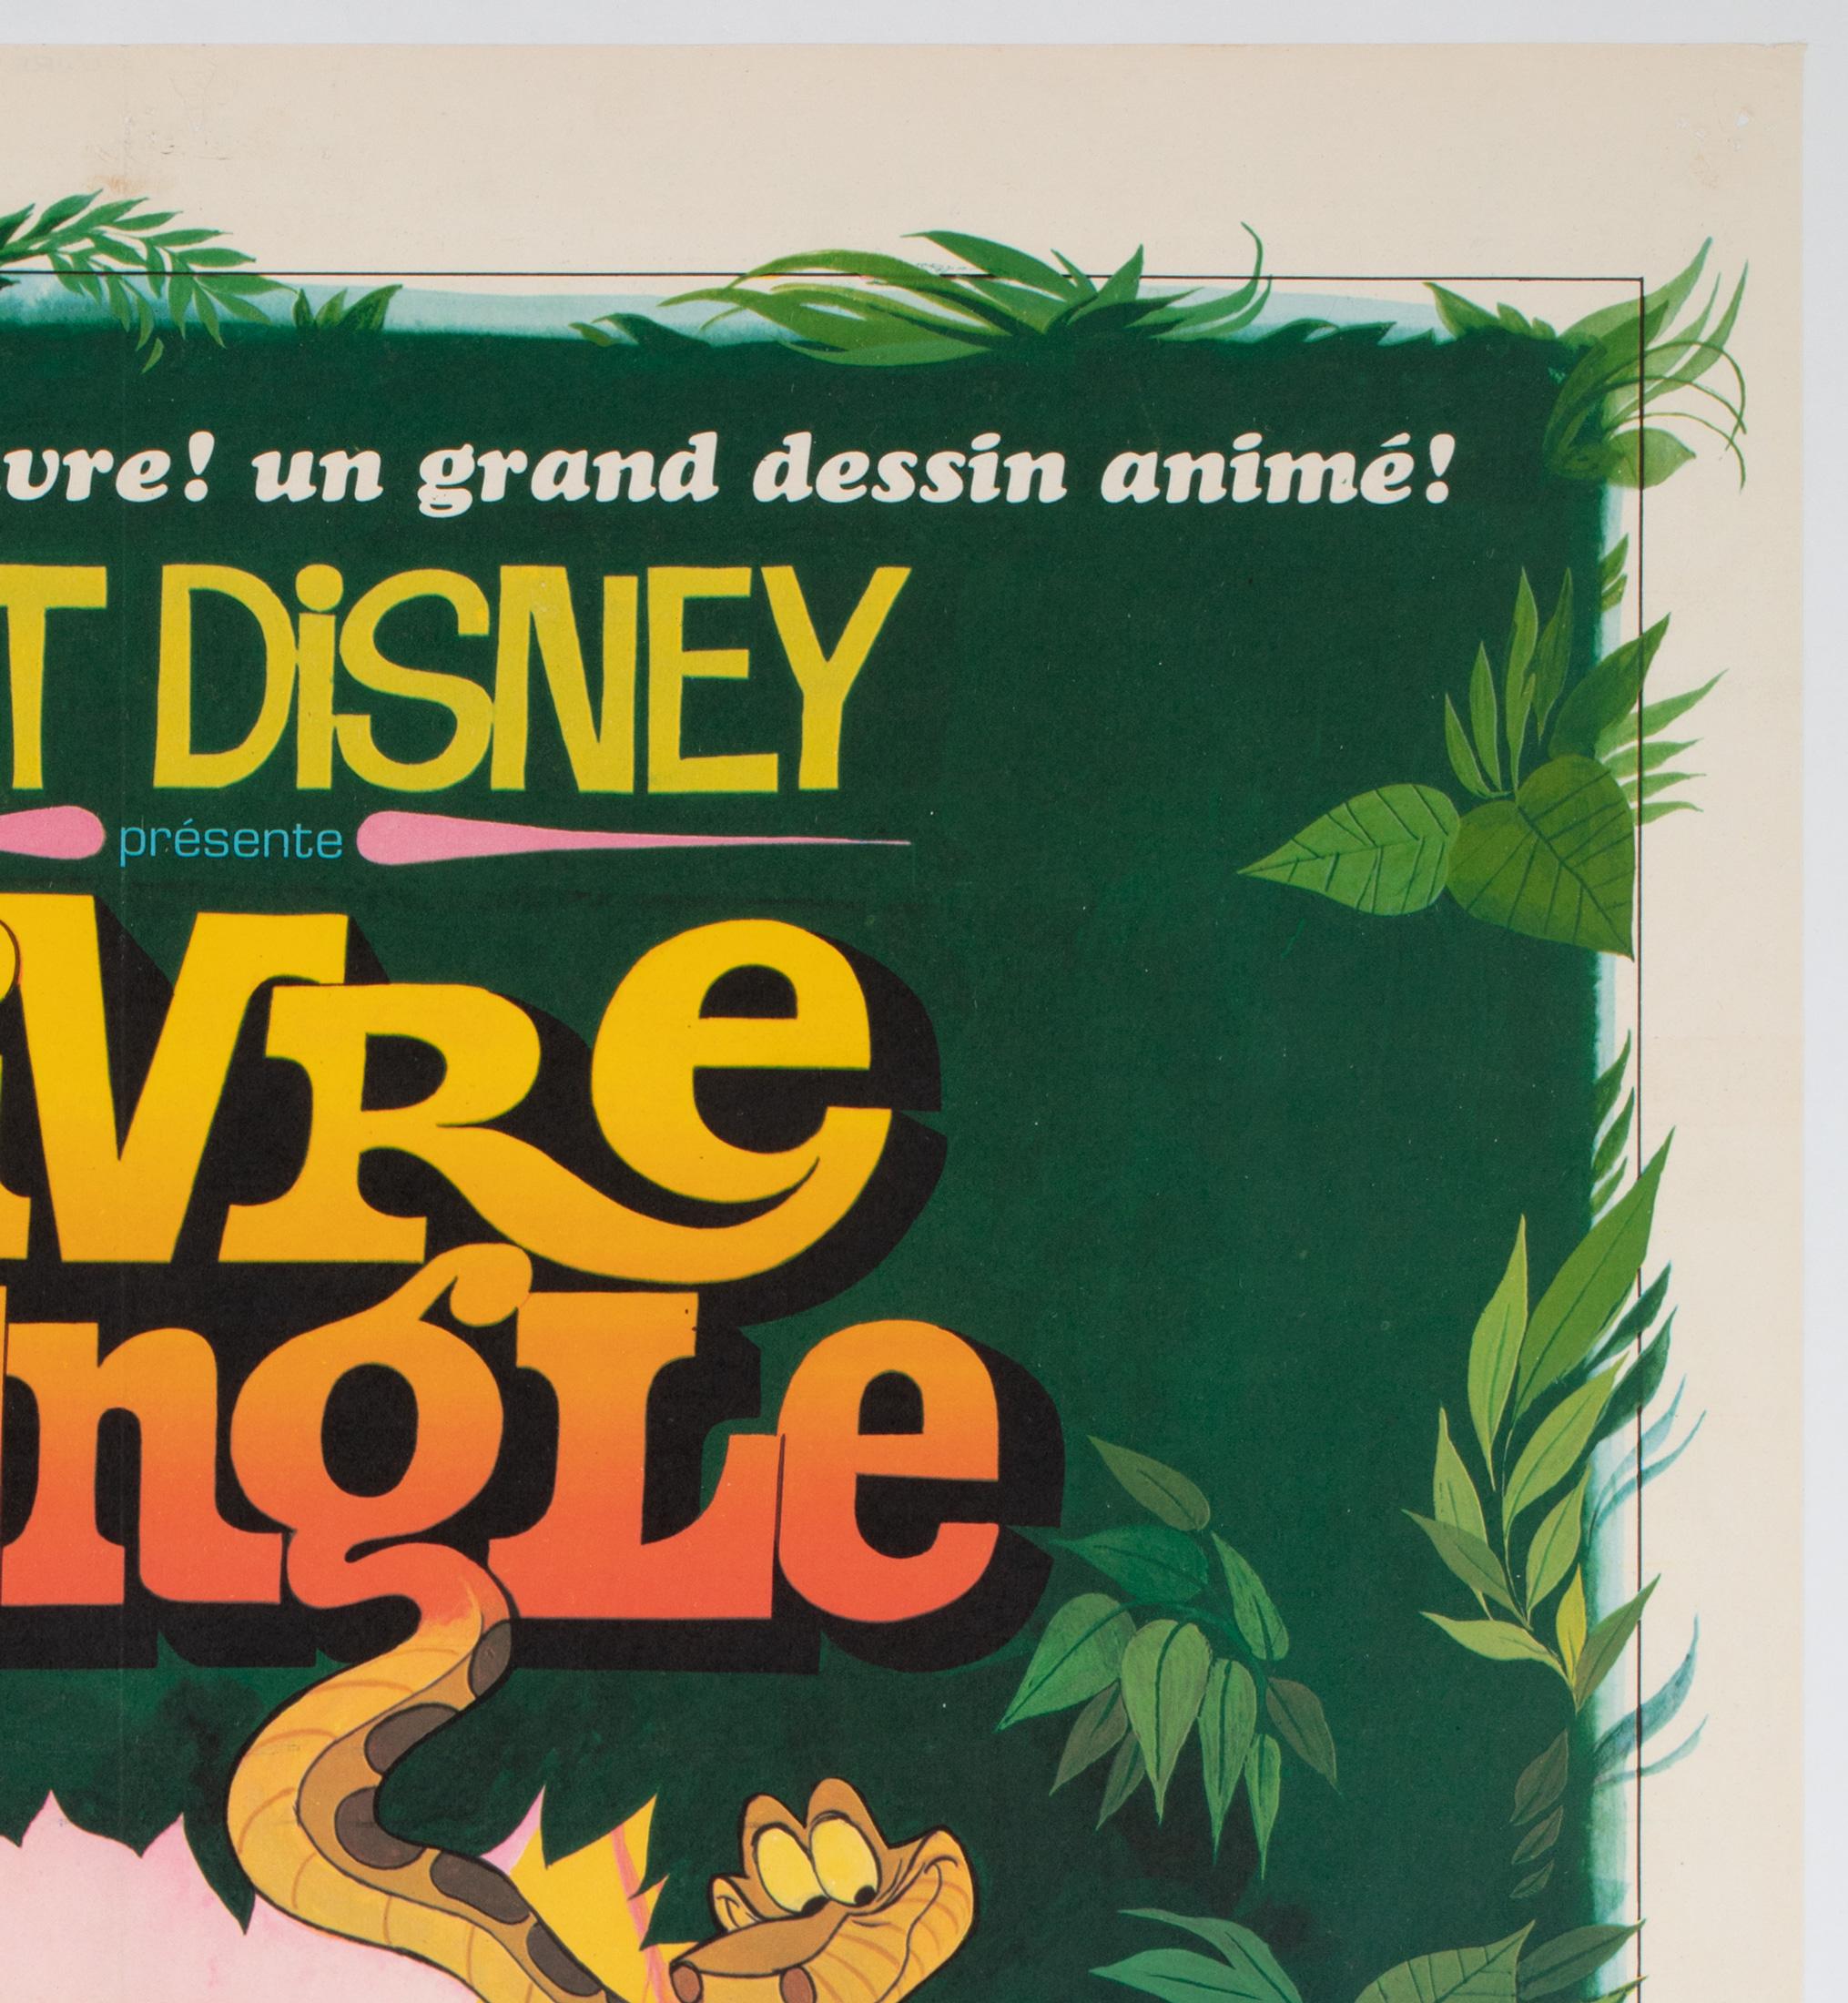 Paper Jungle Book Original French Film Movie Poster, 1968 For Sale